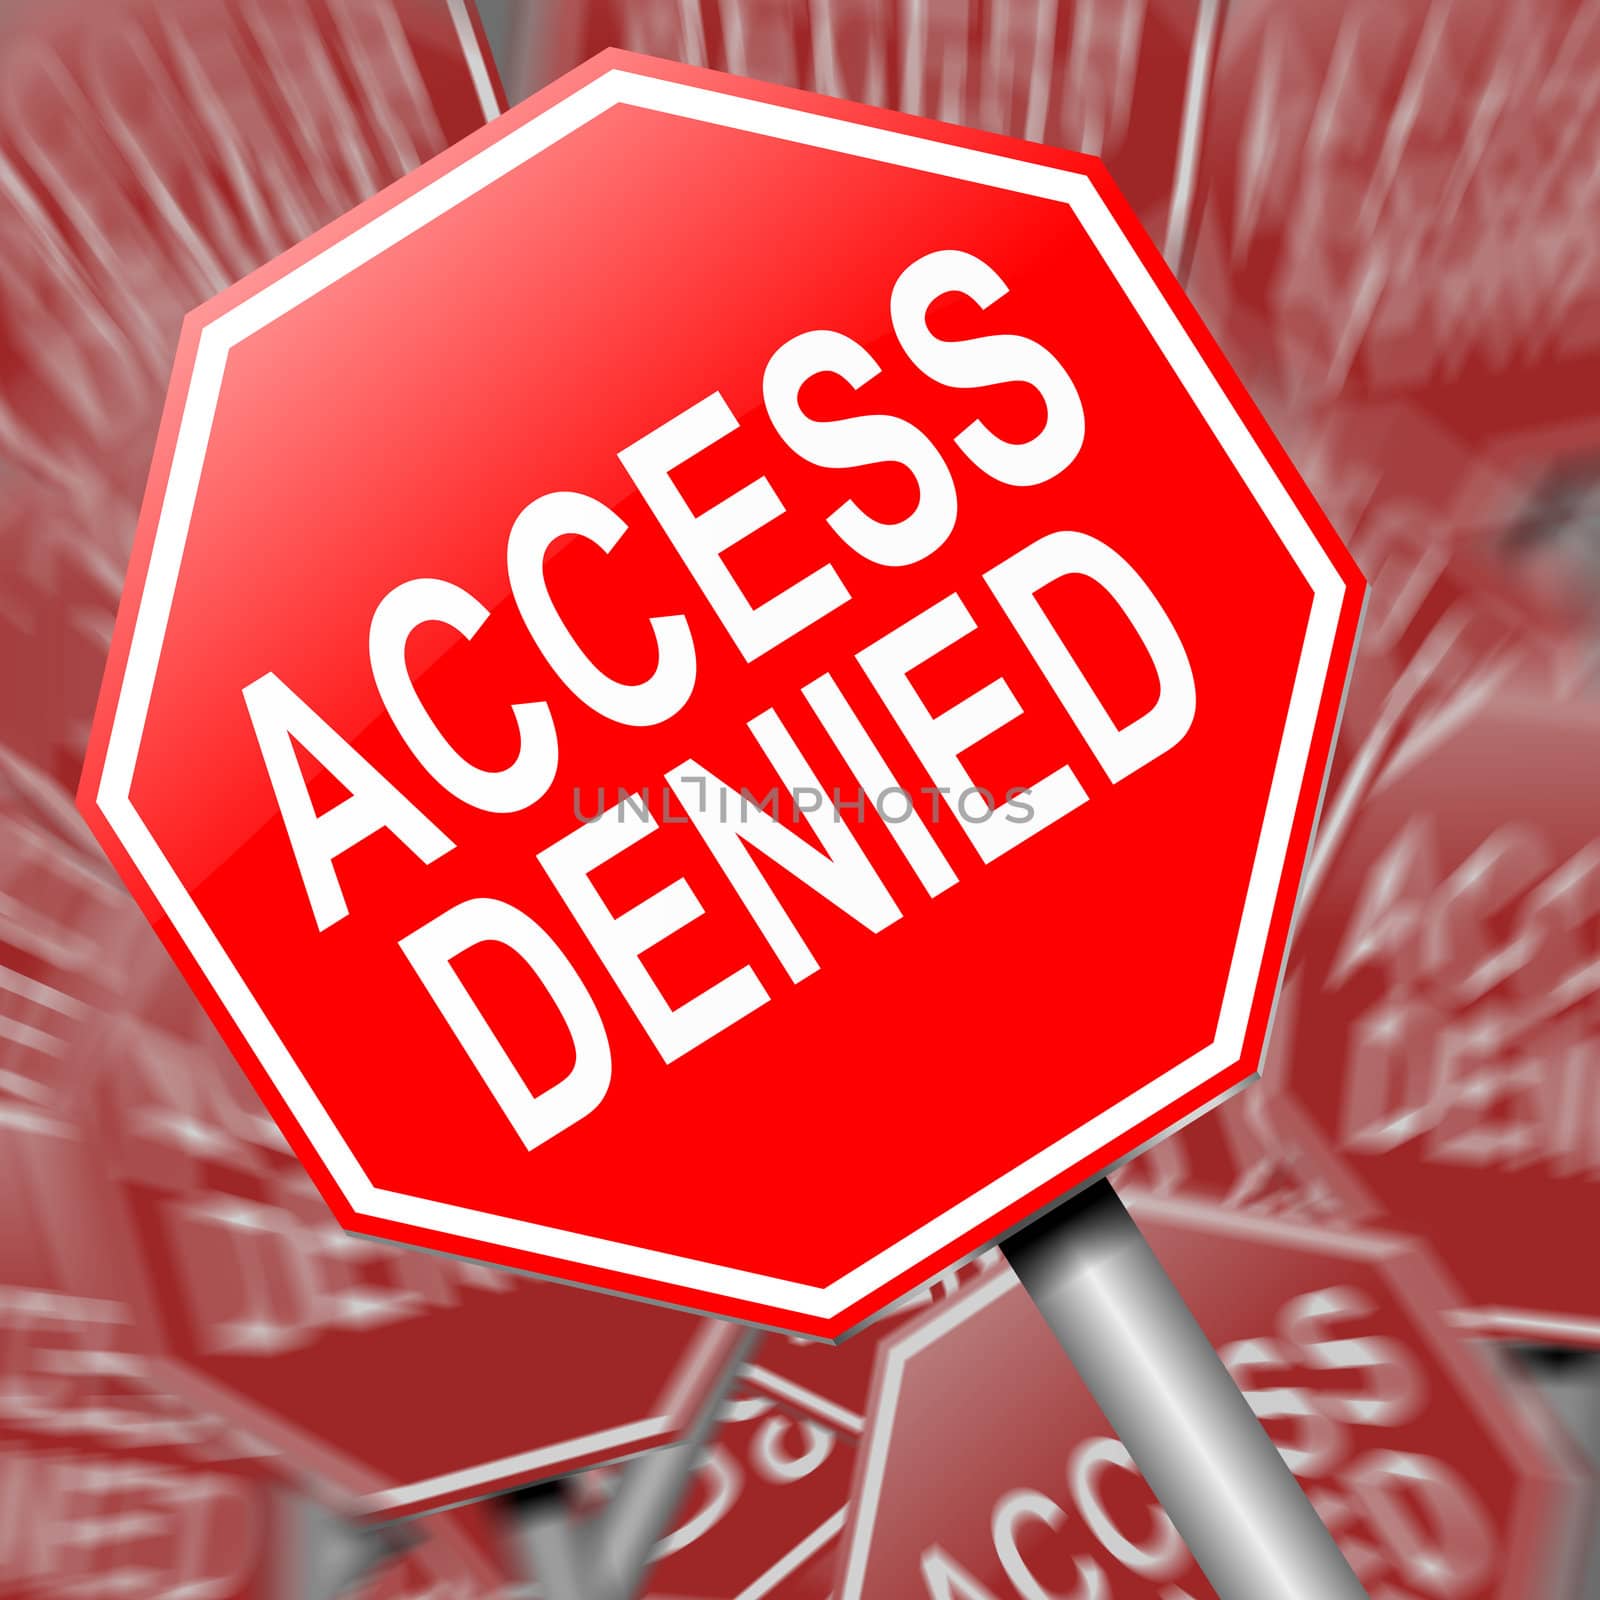 Access denied concept. by 72soul